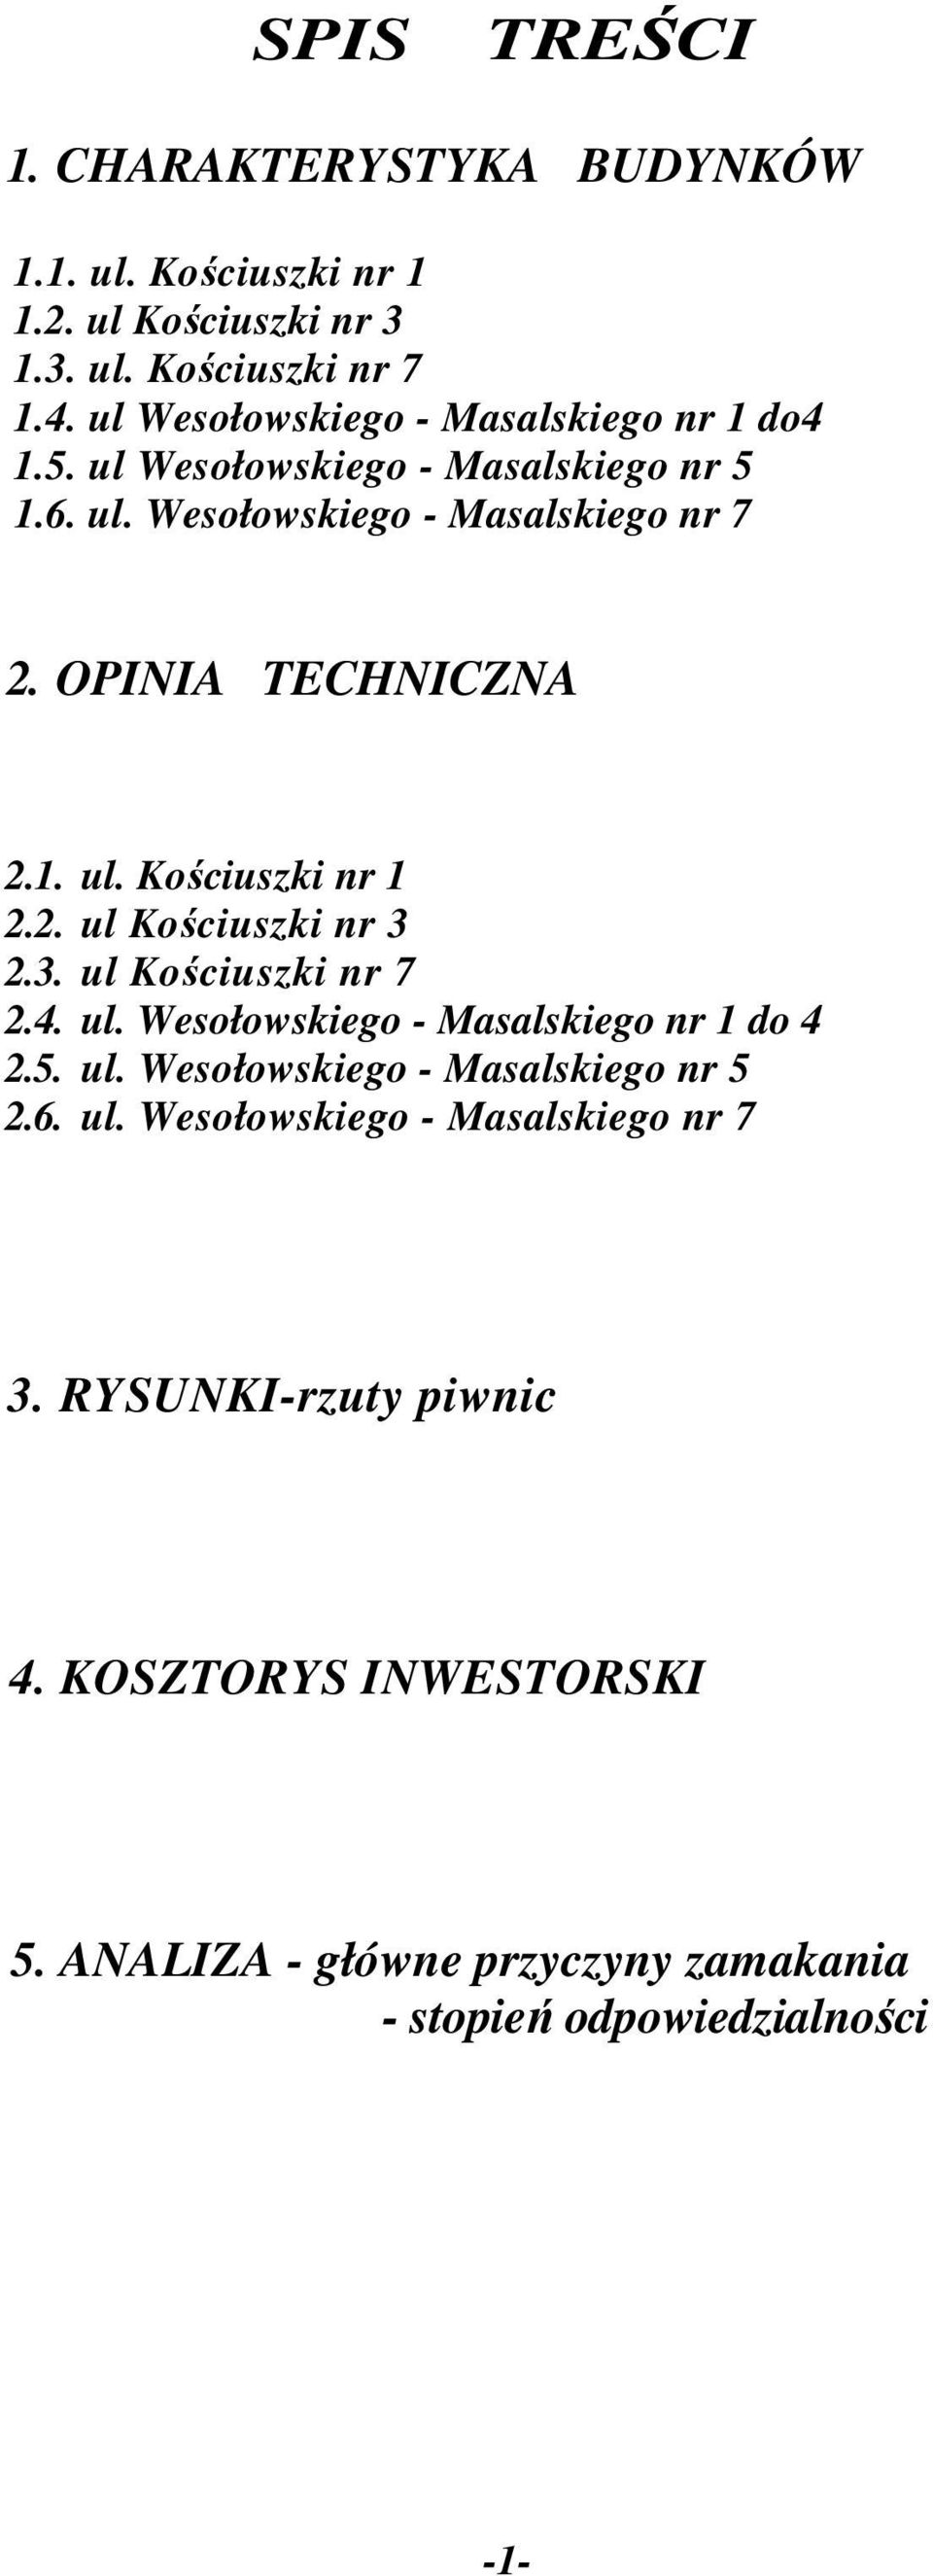 1. ul. Kościuszki nr 1 2.2. ul Kościuszki nr 3 2.3. ul Kościuszki nr 7 2.4. ul. Wesołowskiego - Masalskiego nr 1 do 4 2.5. ul. Wesołowskiego - Masalskiego nr 5 2.